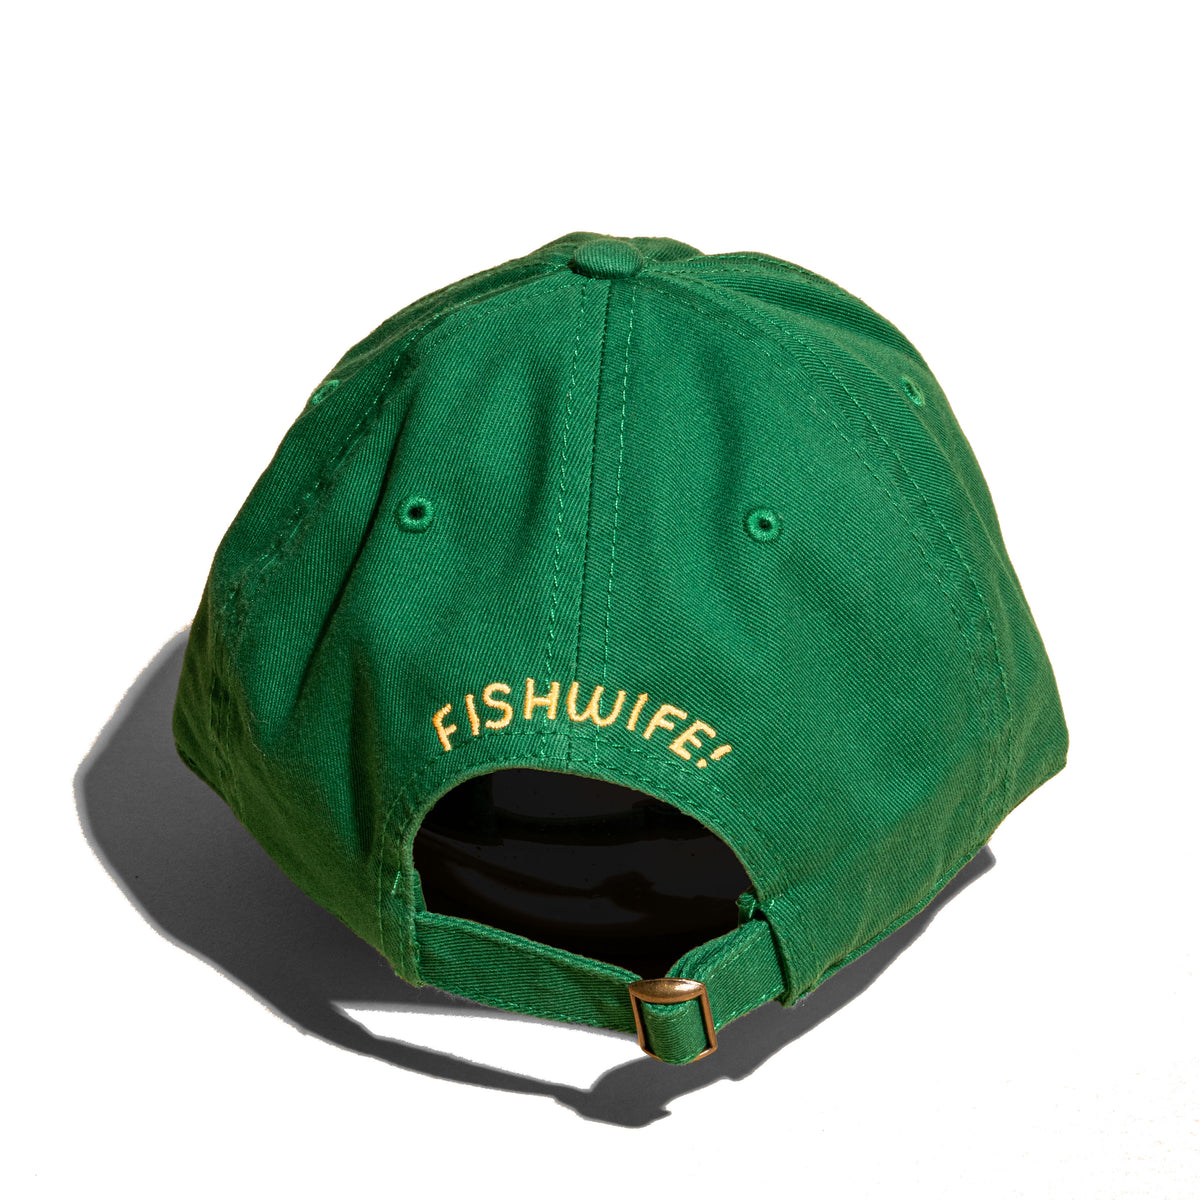 Anchovy Club Hat, Fishwife